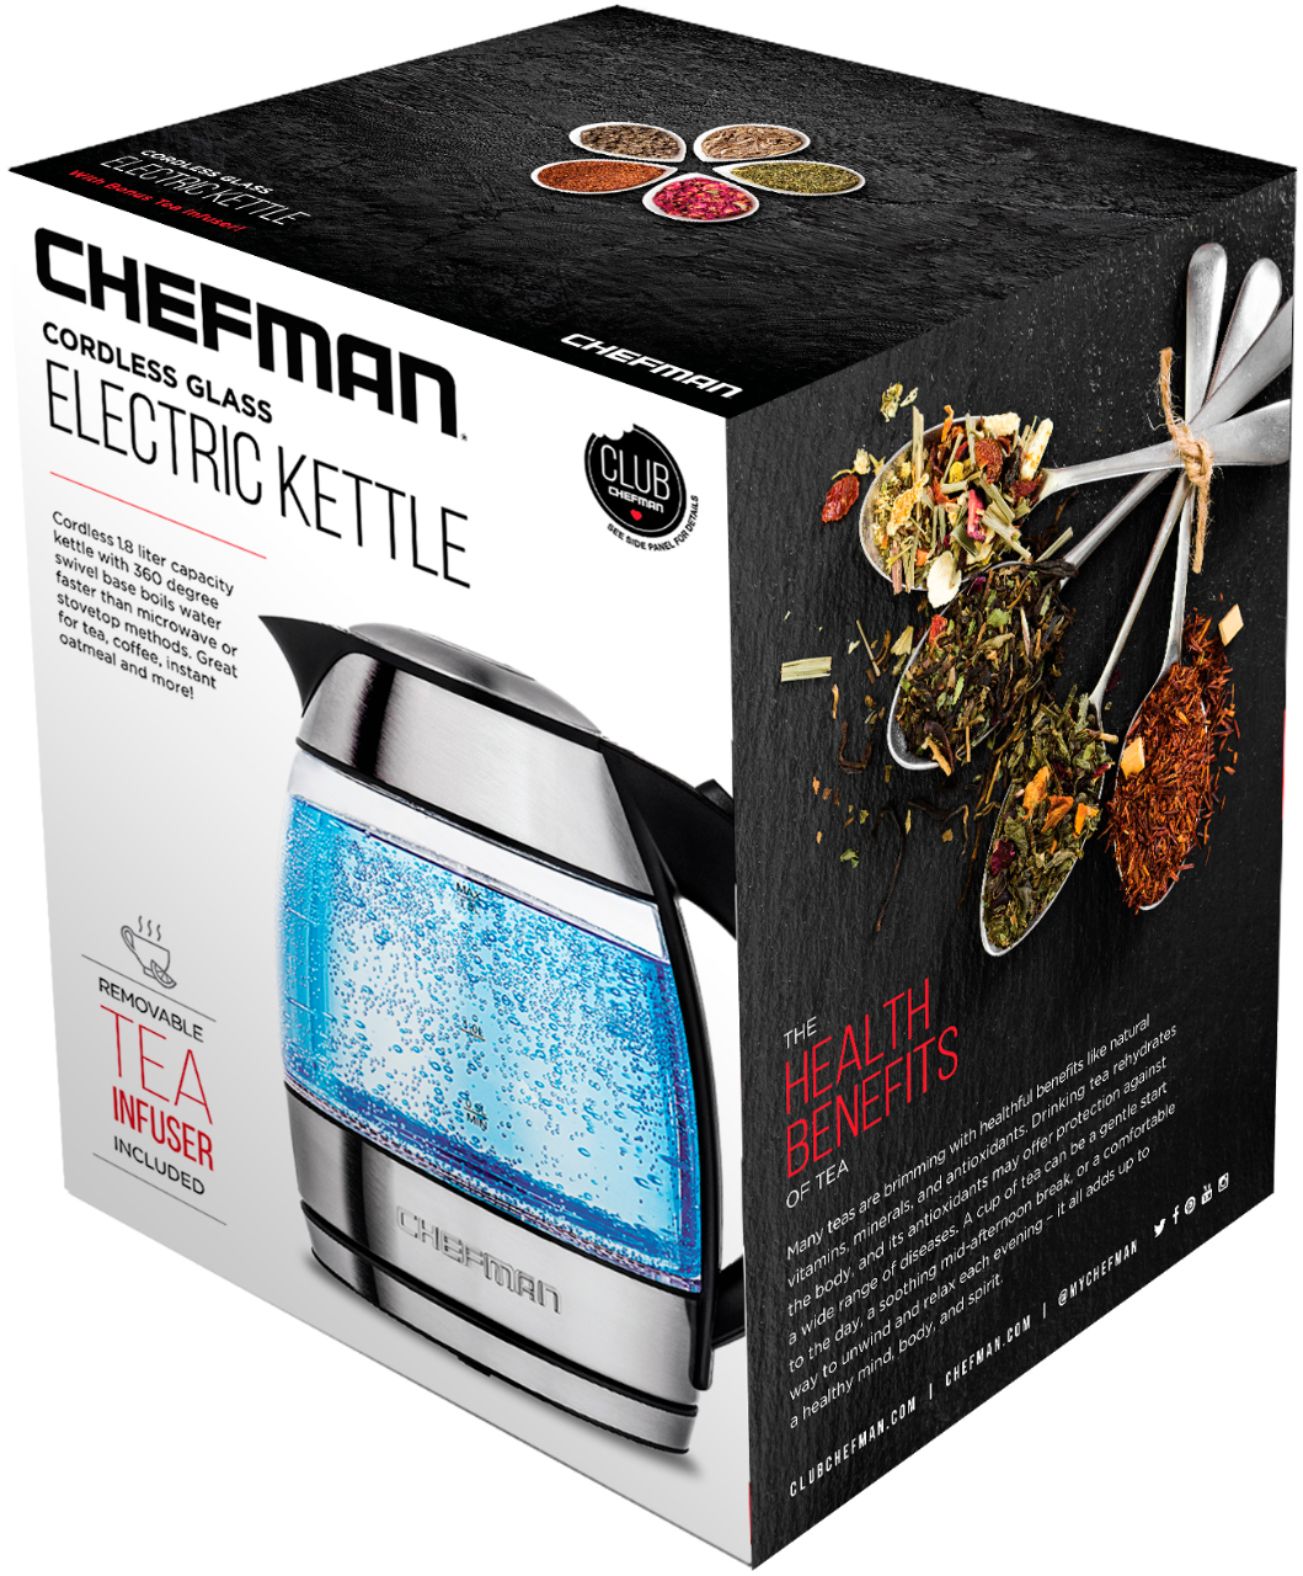 chefman tea kettle